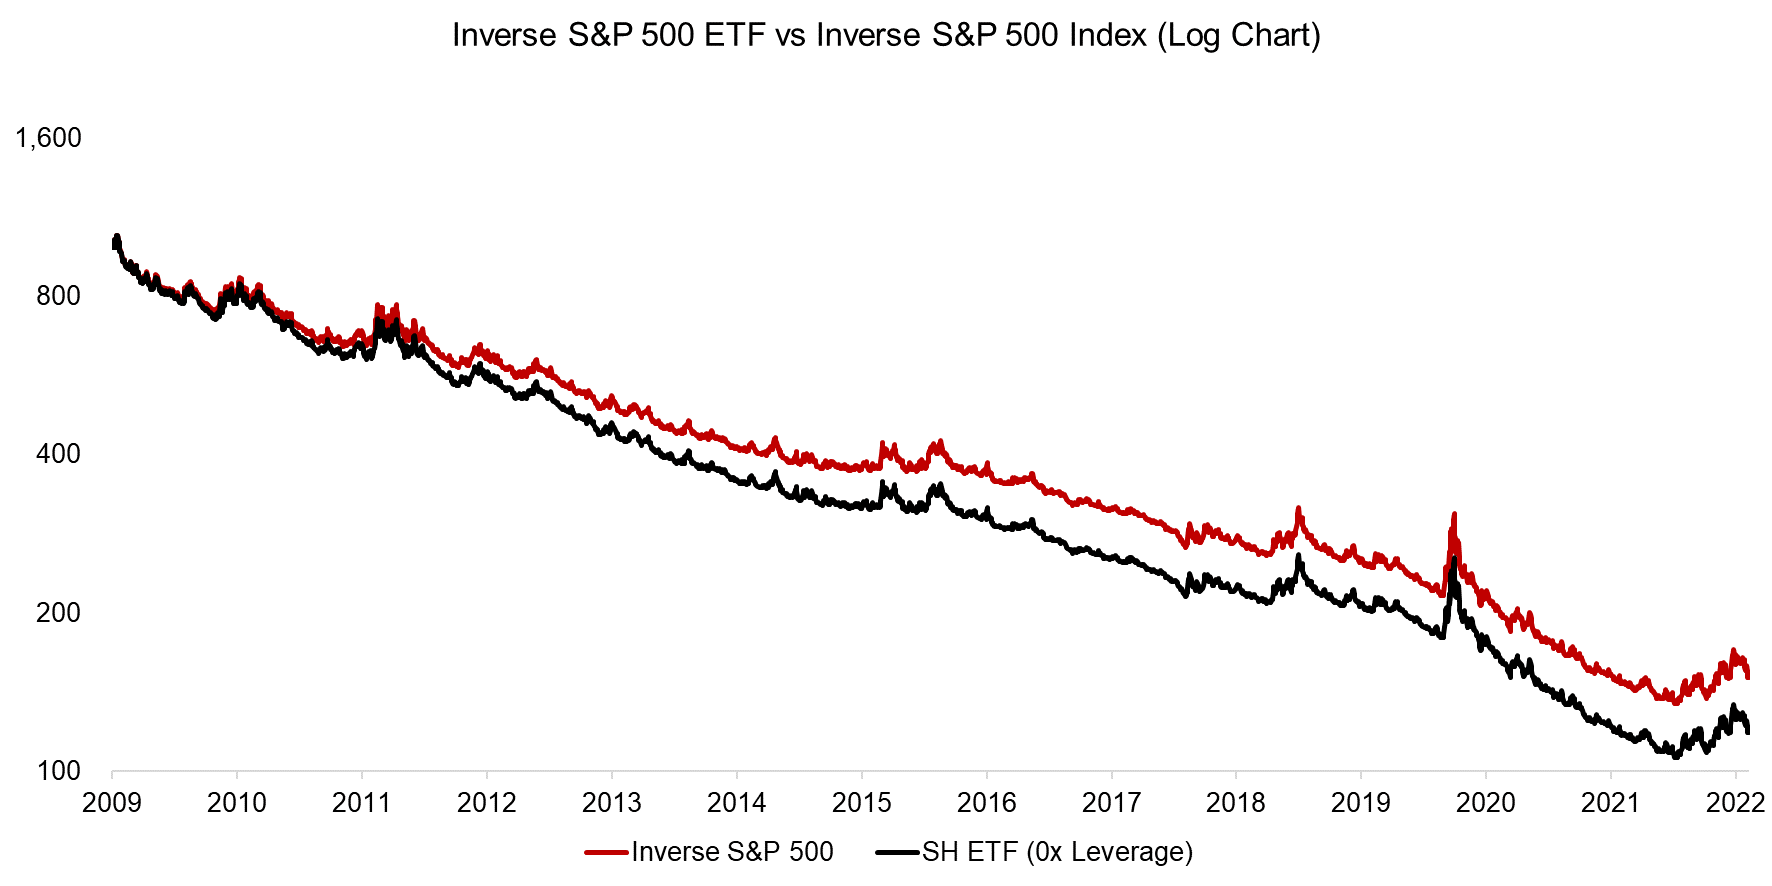 Inverse S&P 500 ETF vs Inverse S&P 500 Index (Log Chart)